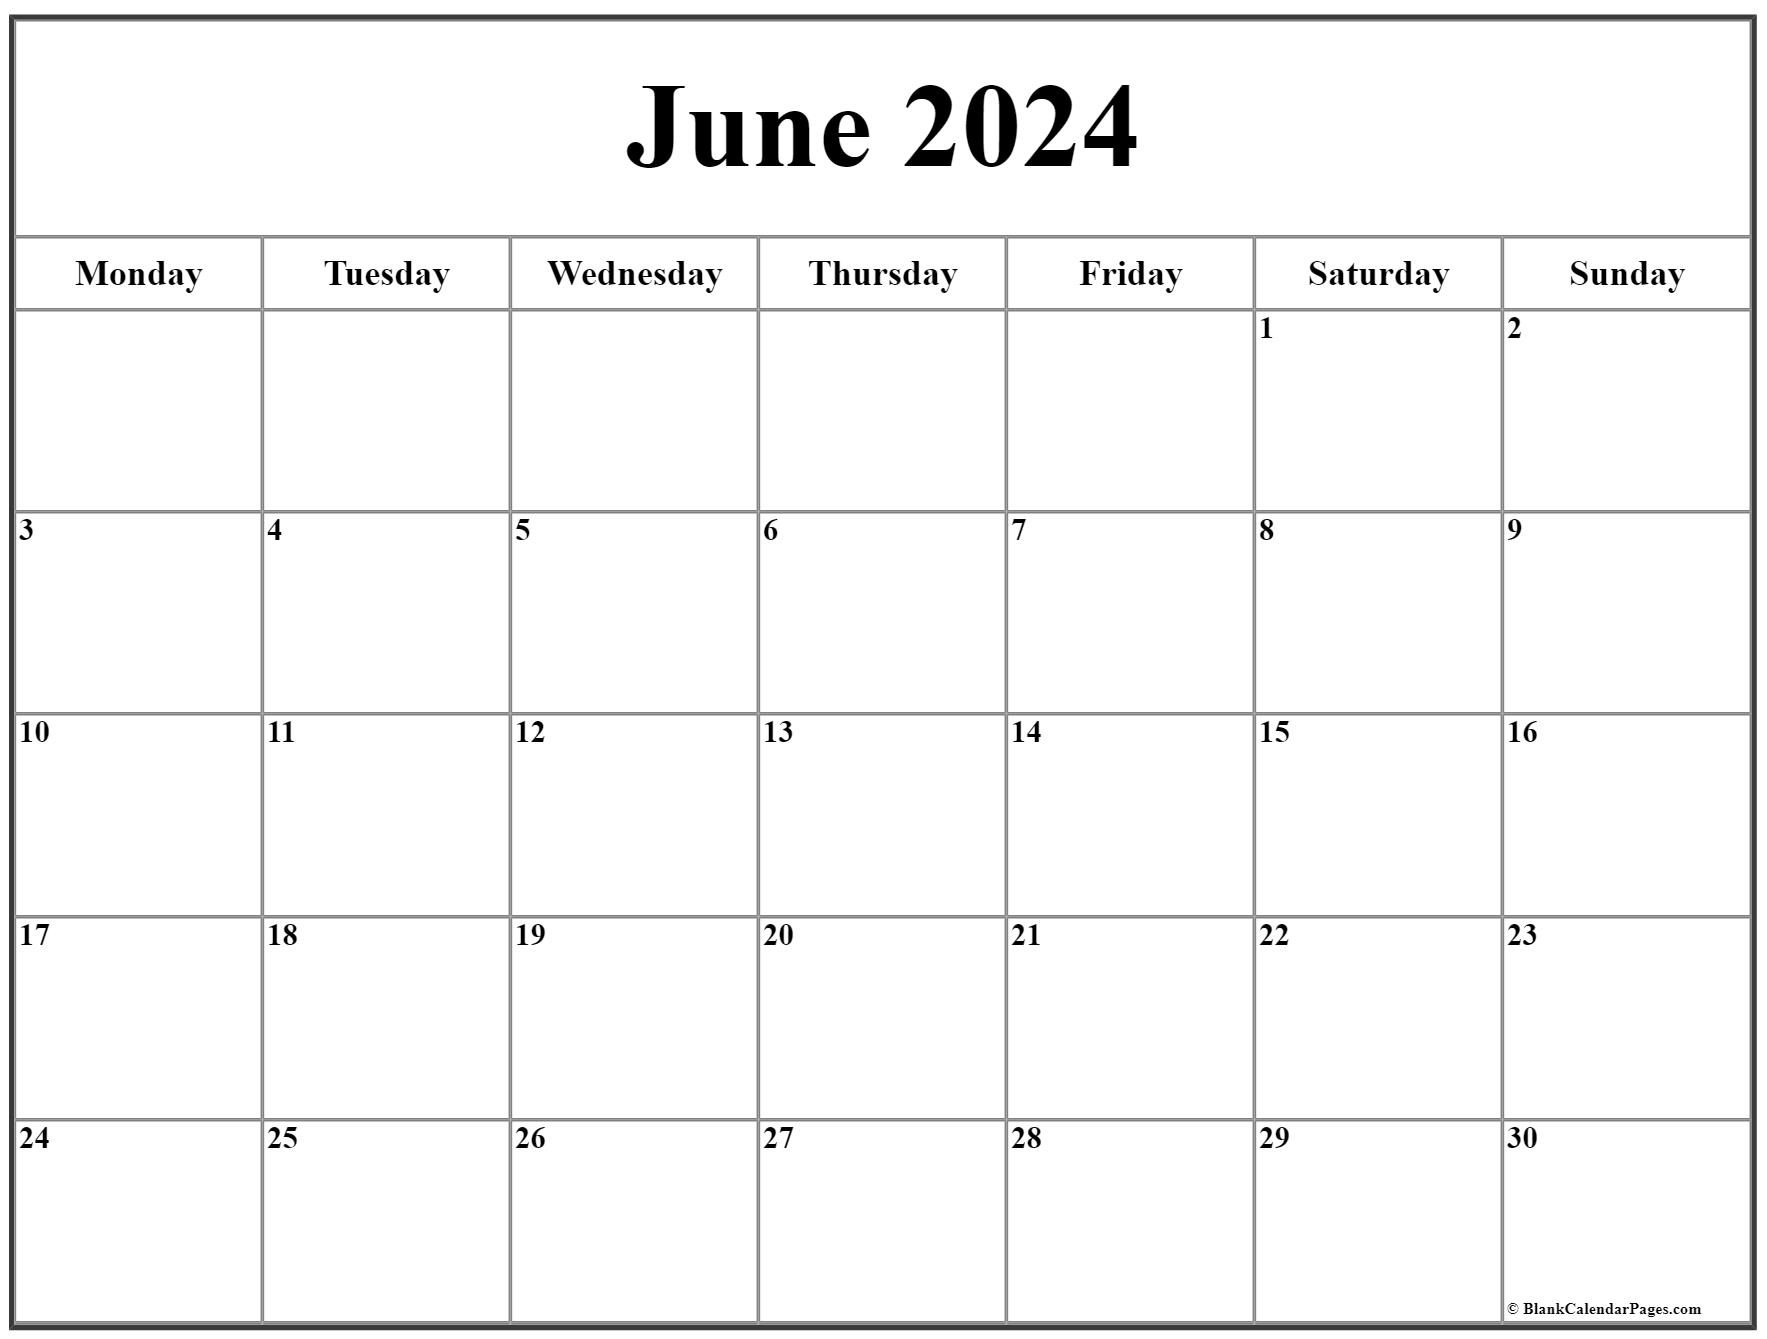 June 2024 Monday Calendar | Monday To Sunday for A Printable Calendar June 2024